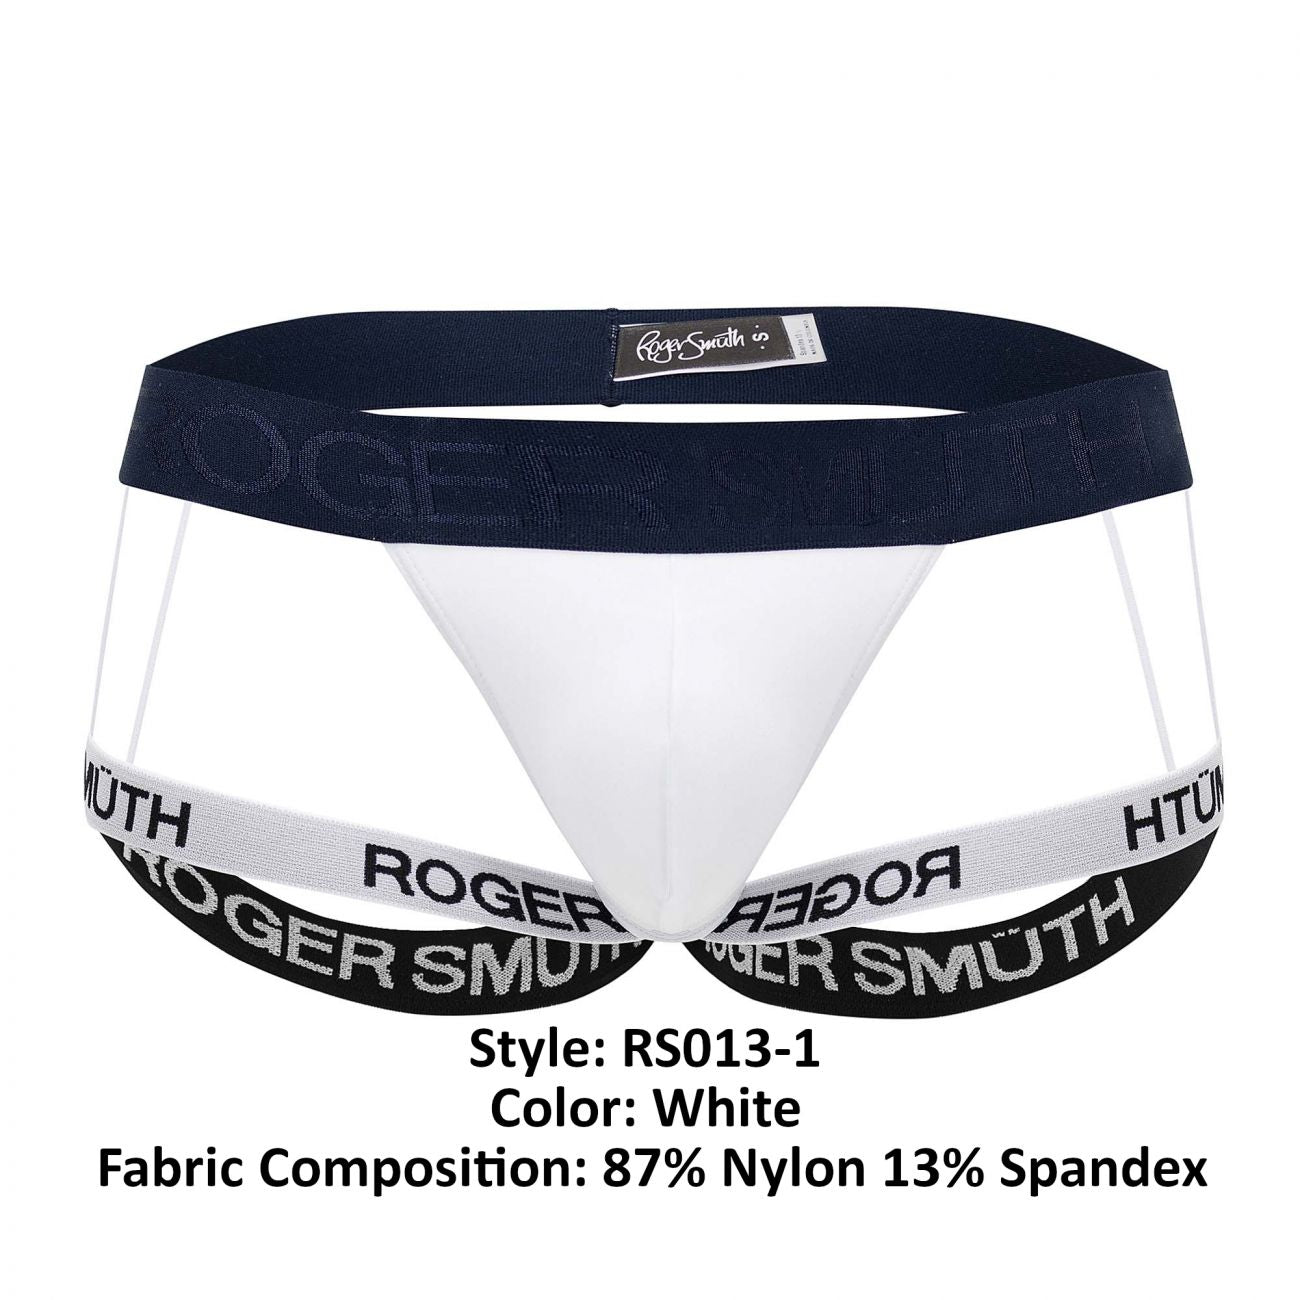 Roger Smuth RS013-1 Jockstrap White